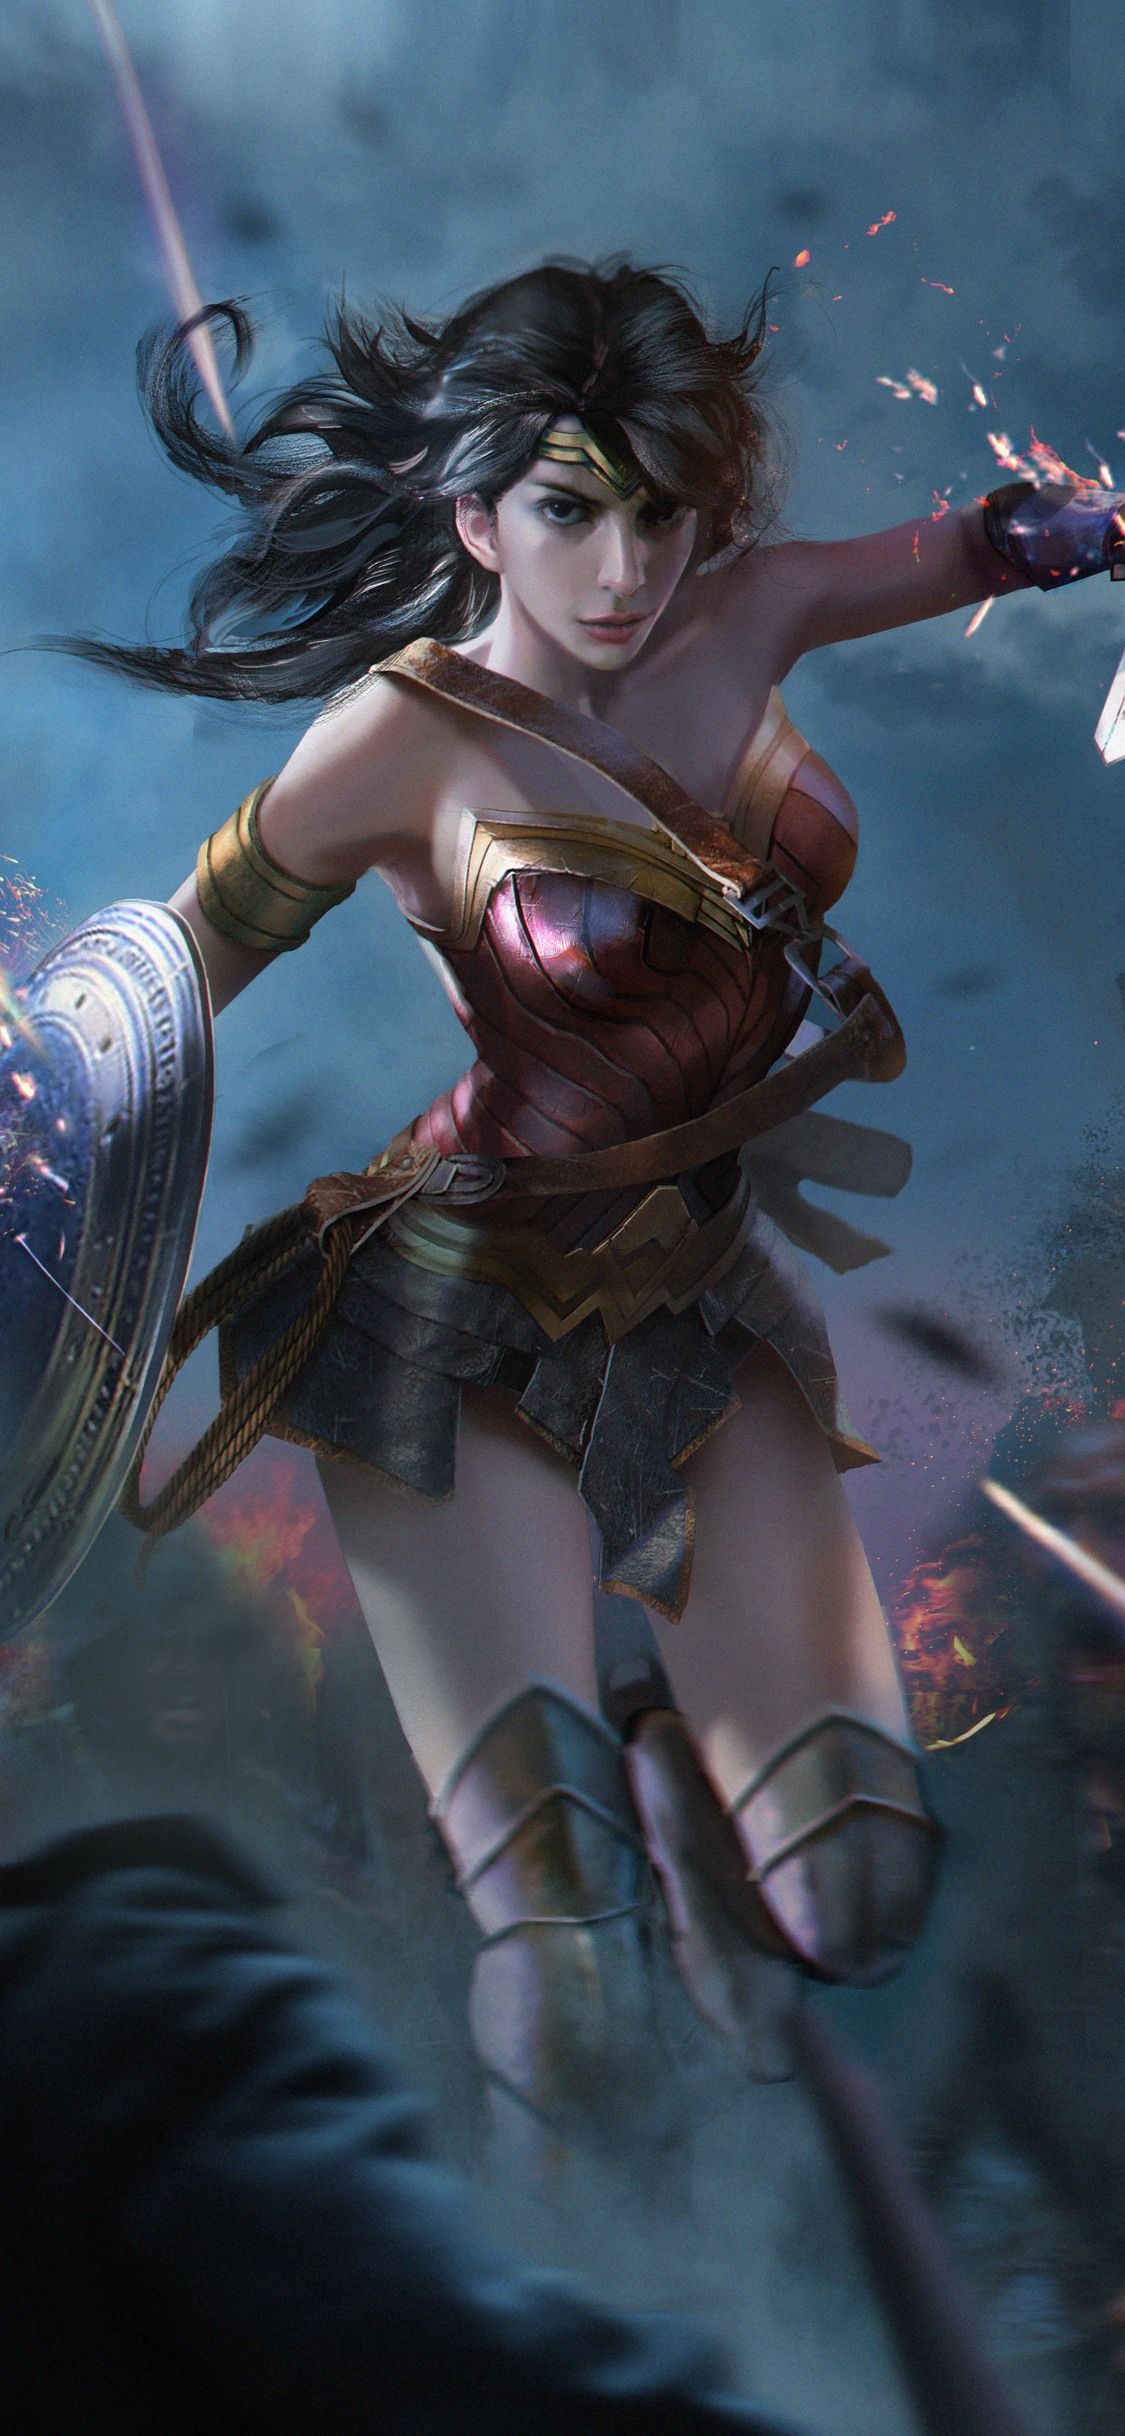 Wonder Woman Fantasy Art 4k In 1125x2436 Resolution. Wonder woman, Wonder woman art, Mobile wallpaper